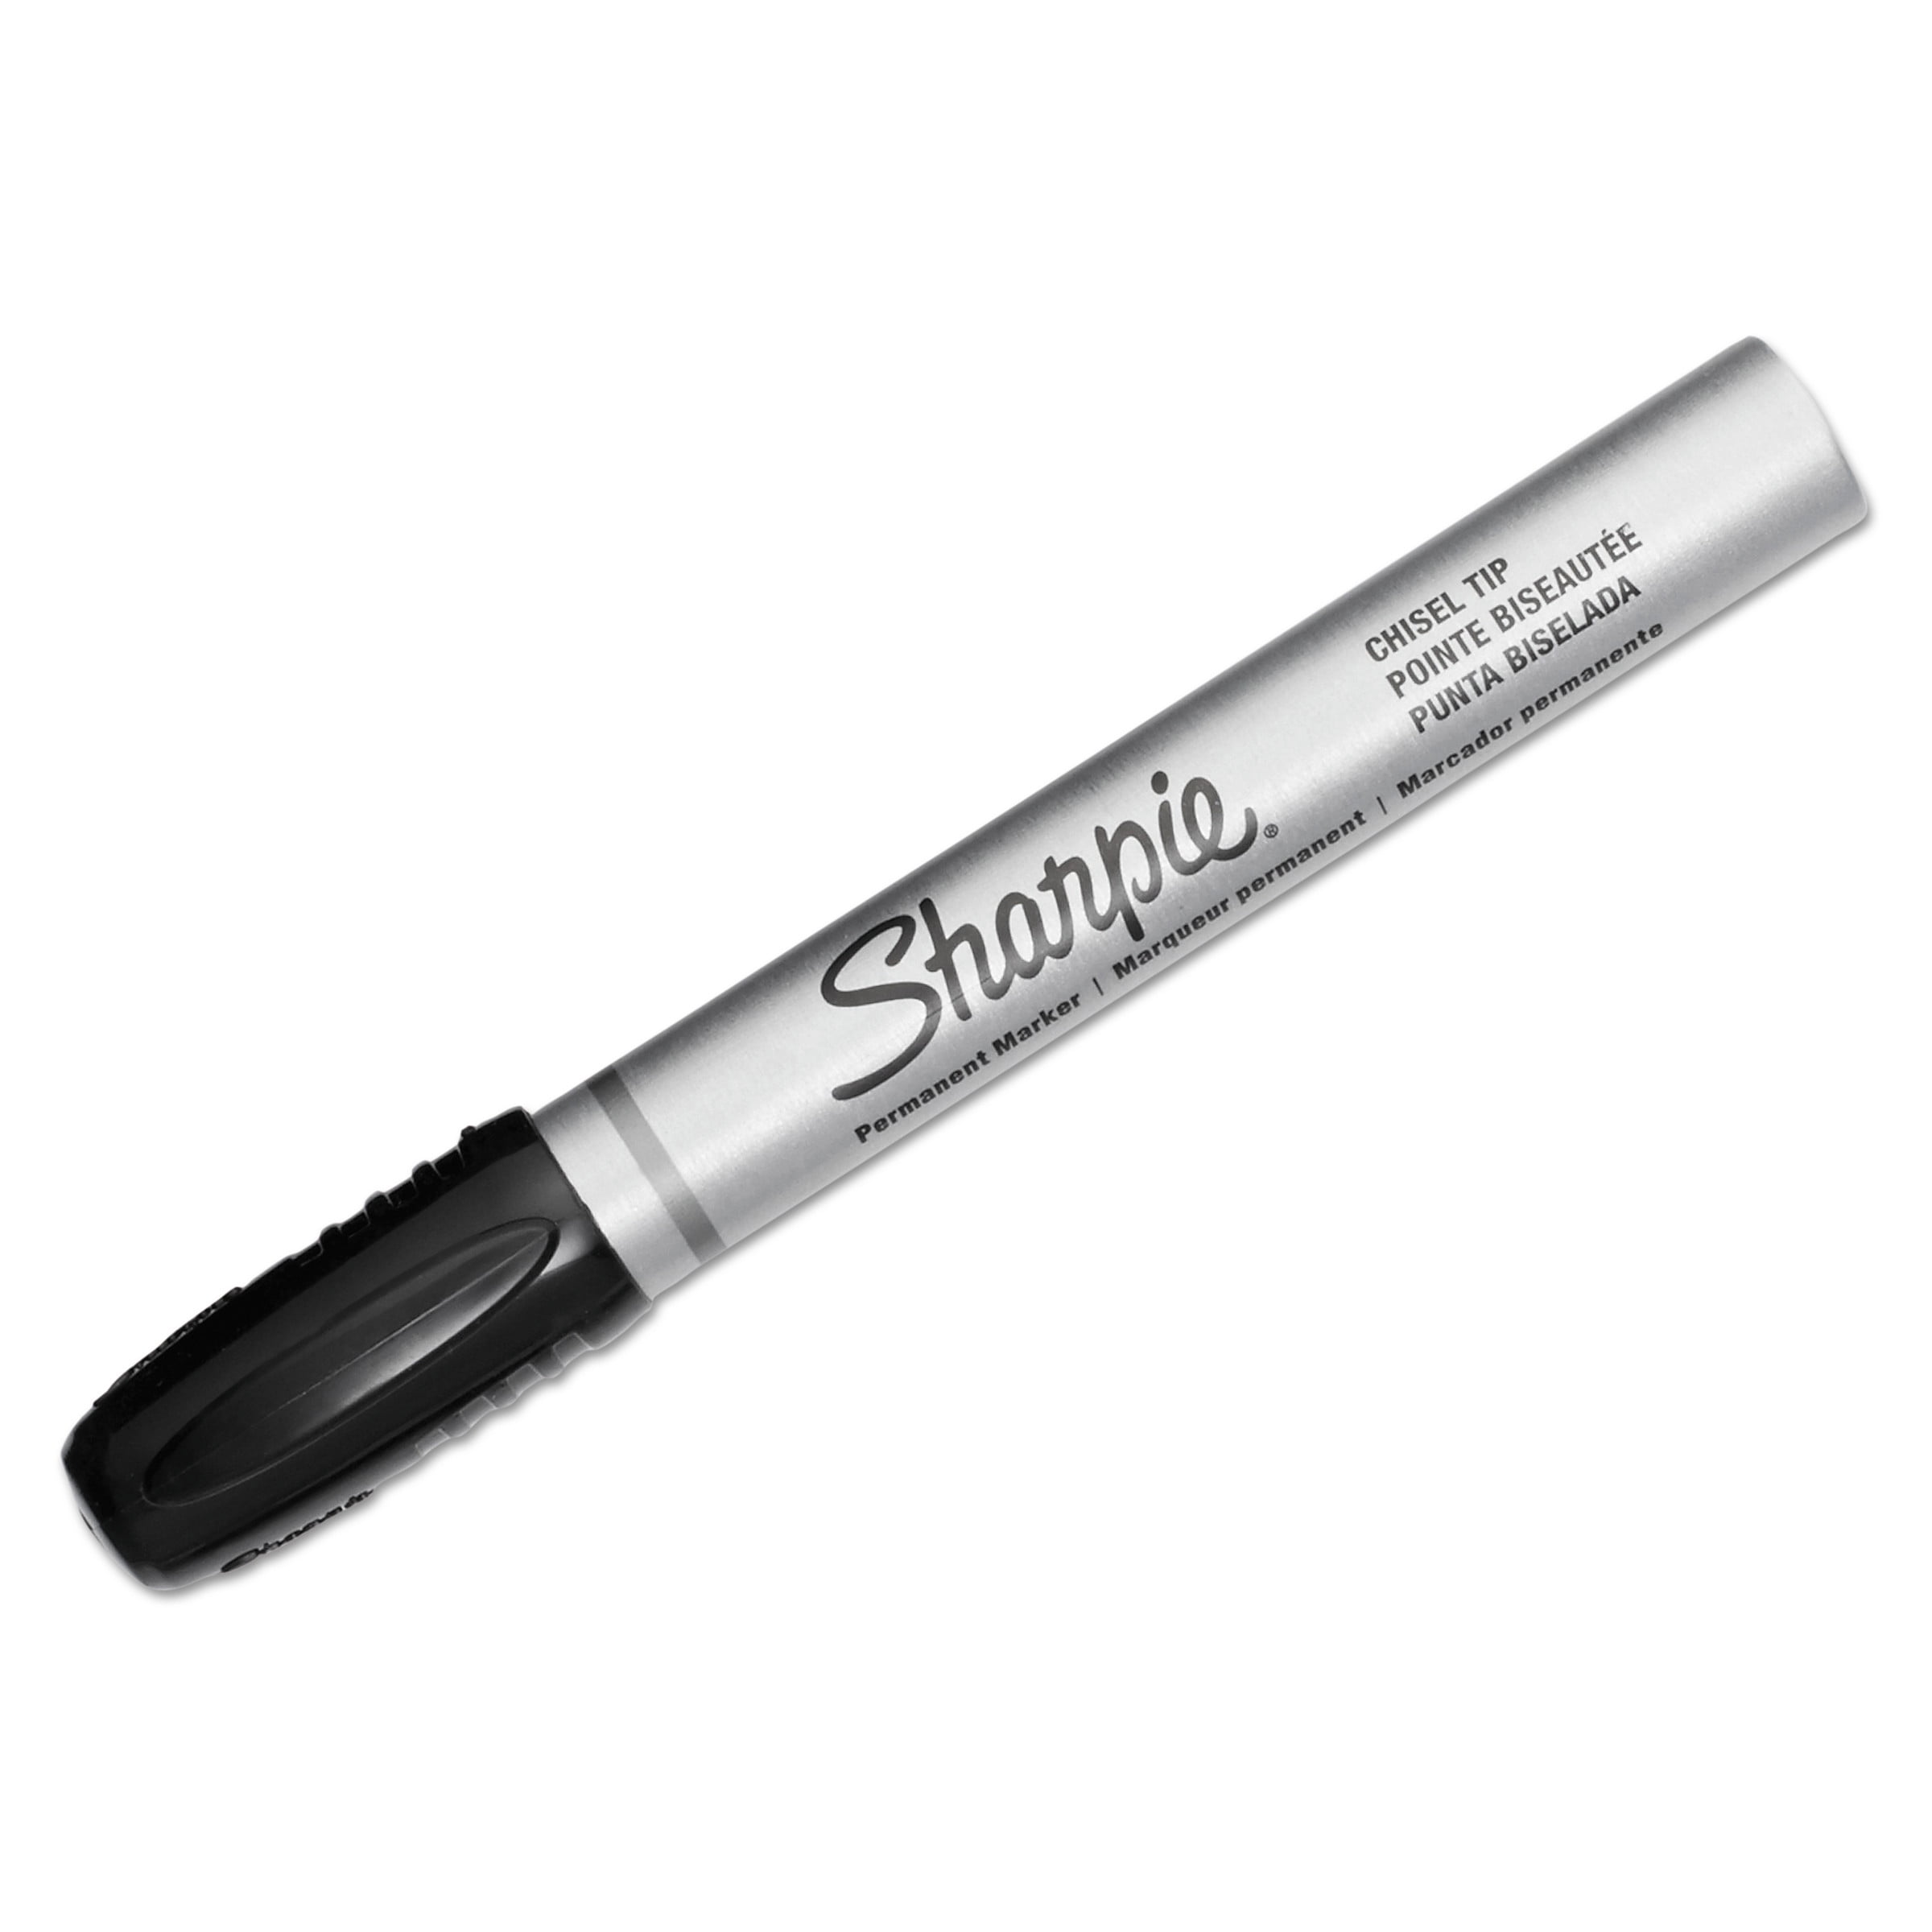 Sharpie Pro Permanent Marker, Chisel